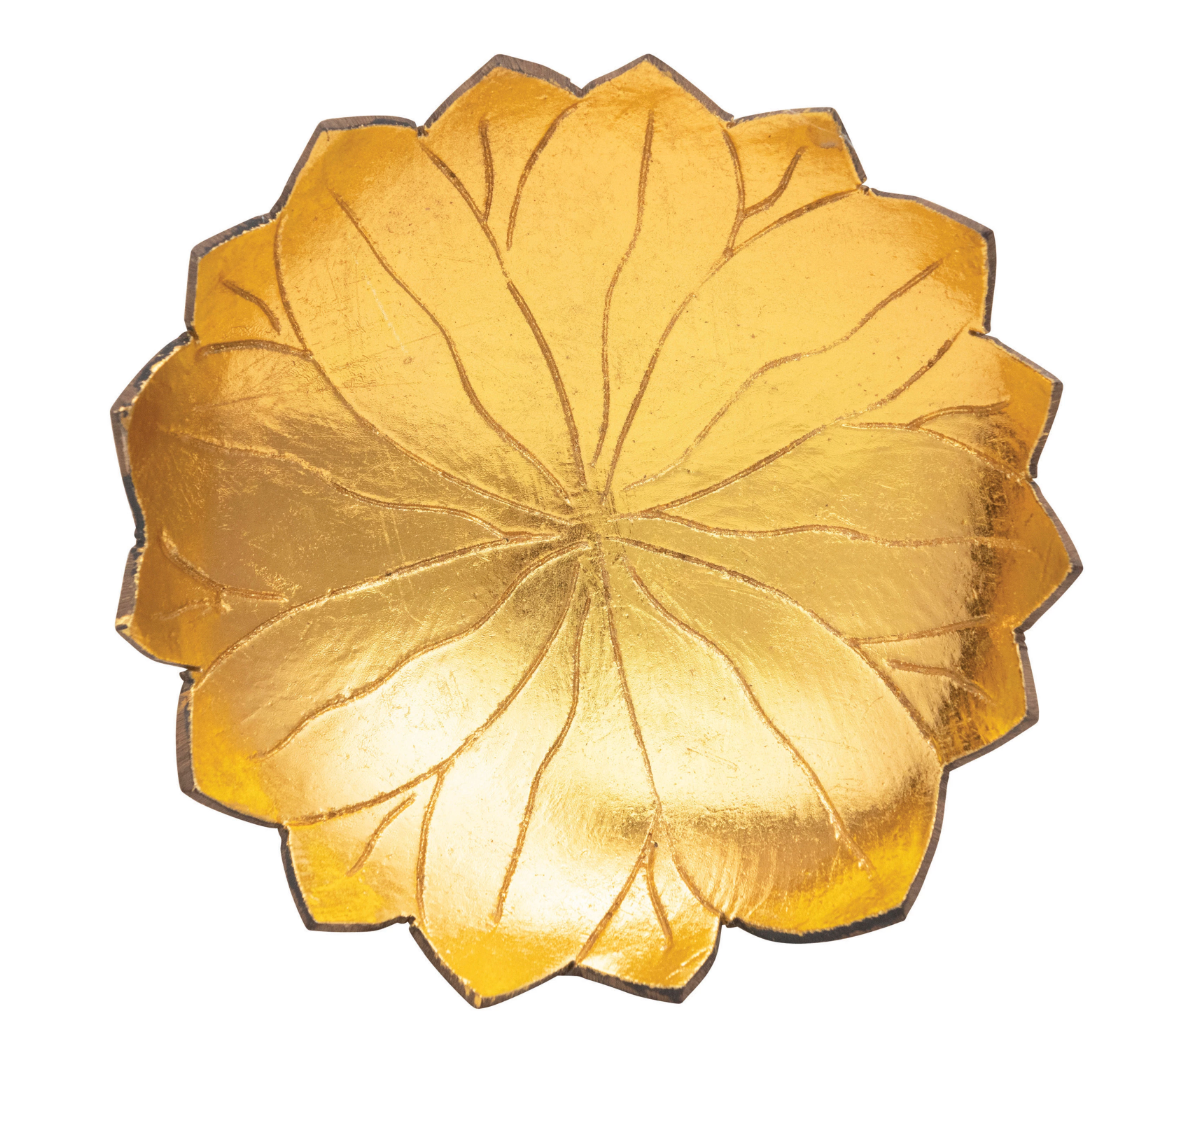 Decorative Coconut Shell Lotus-Shaped Bowl